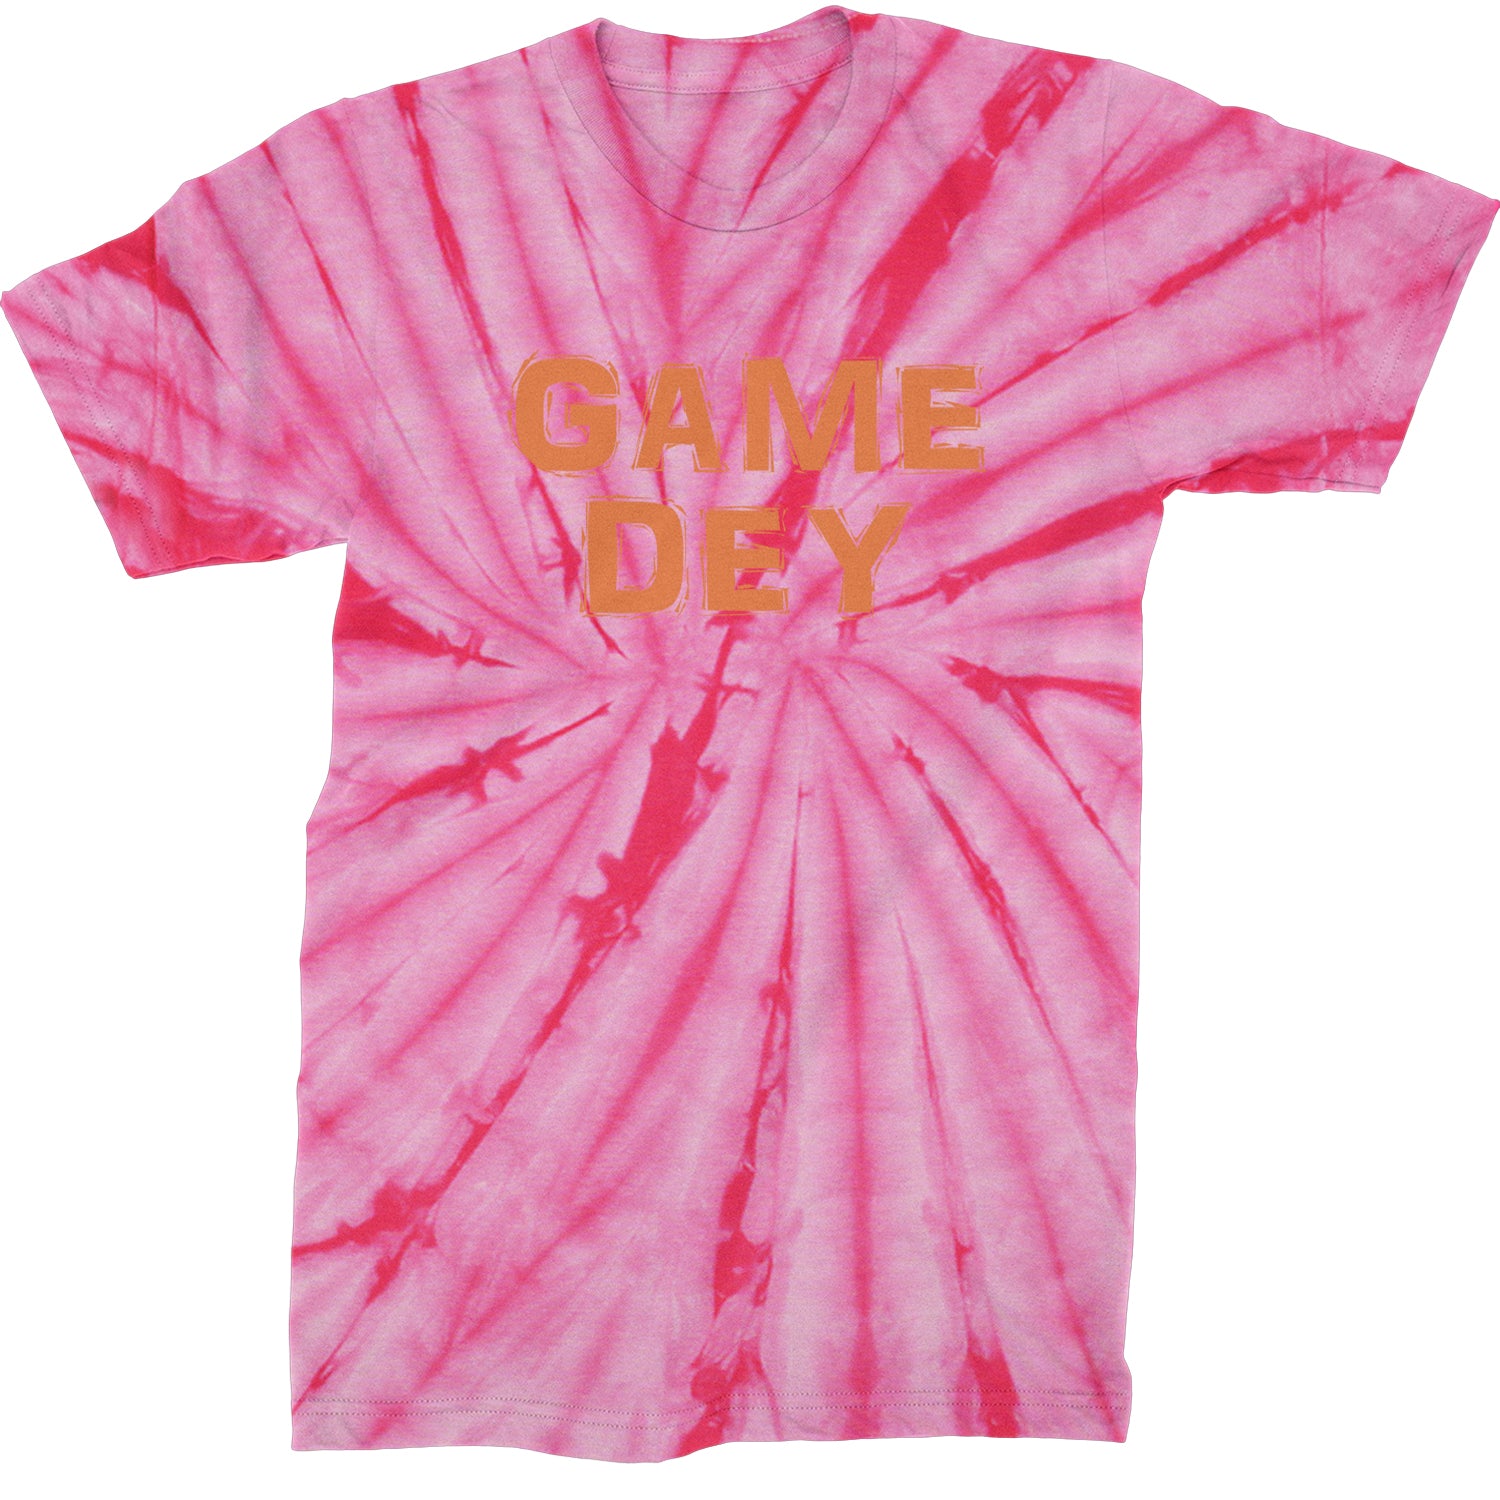 Game Dey Cincinnati Football Mens T-shirt Tie-Dye Spider Pink